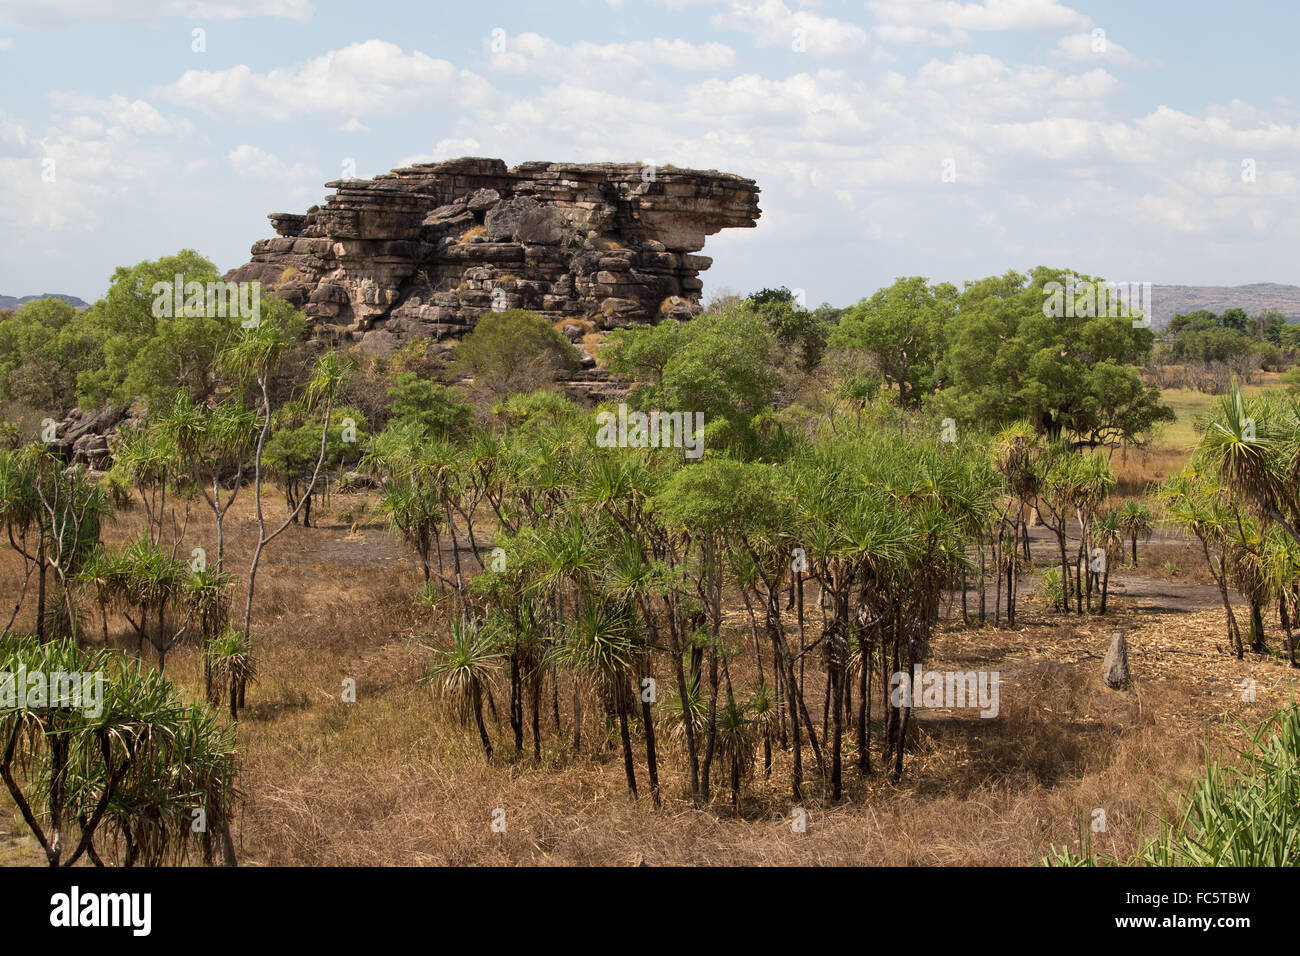 rock outcrops in a mix of savannah and sclerophyll woodland habitat, Kakadu National Park, Australia Stock Photo